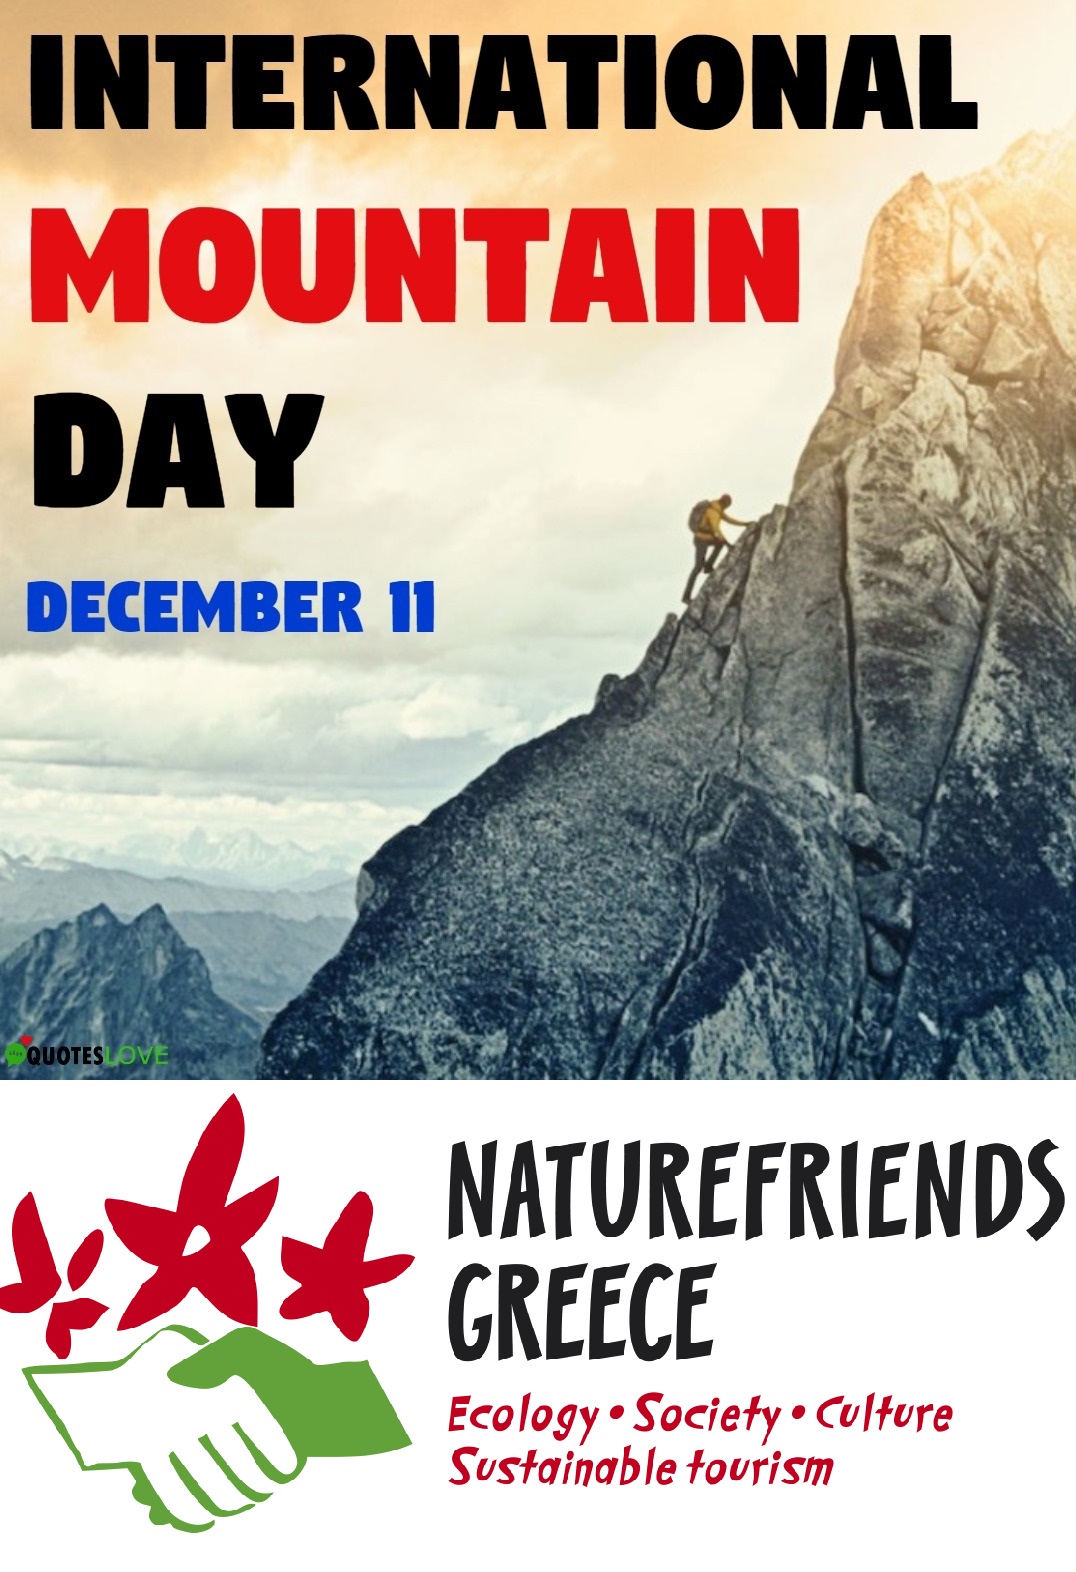 International-Mountain-Day-Images-Poster - NFGR.jpg